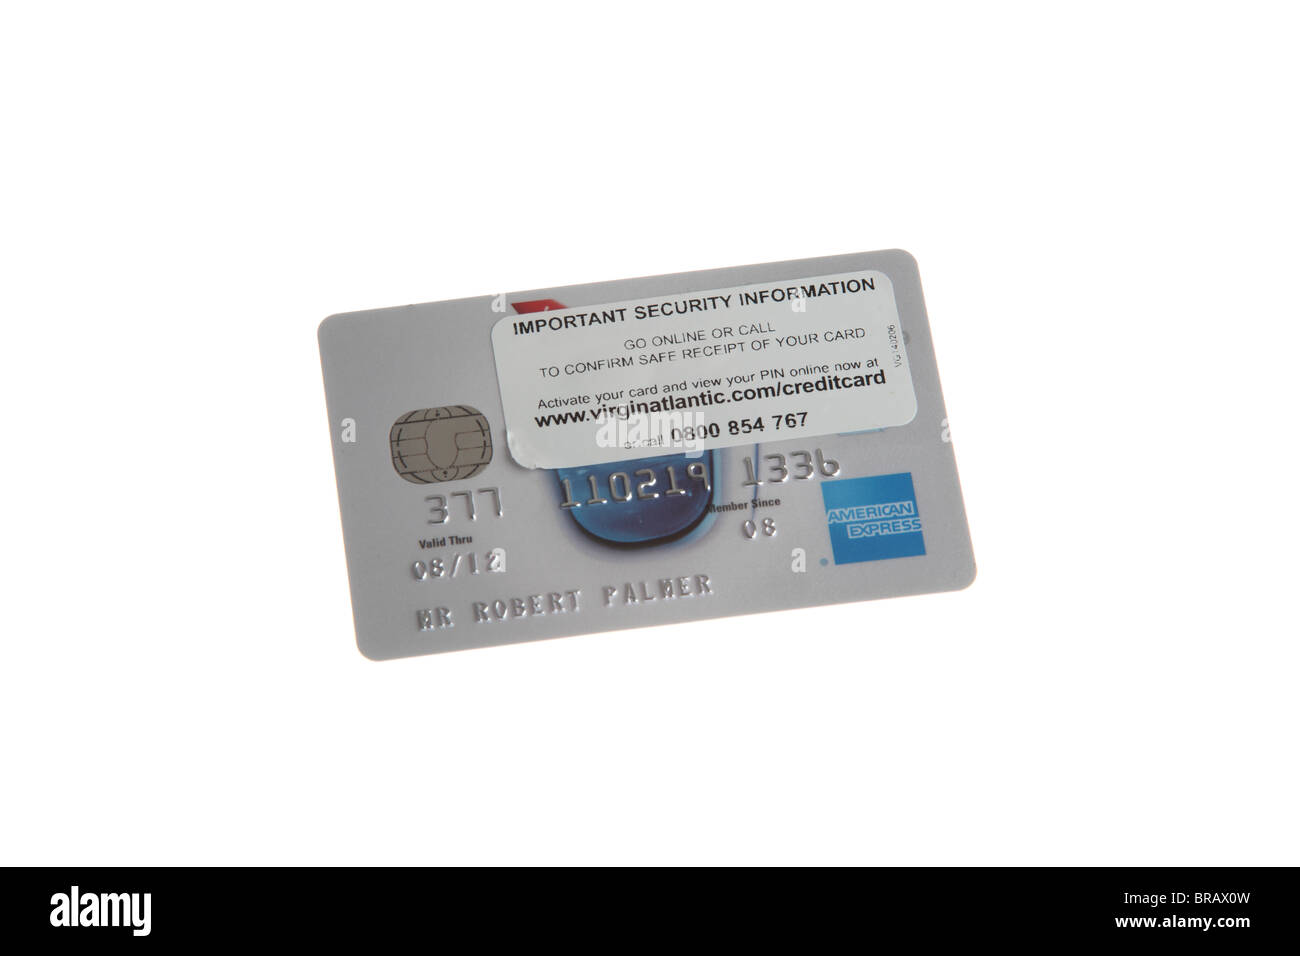 Virgin Atlantic Credit card Stock Photo Alamy